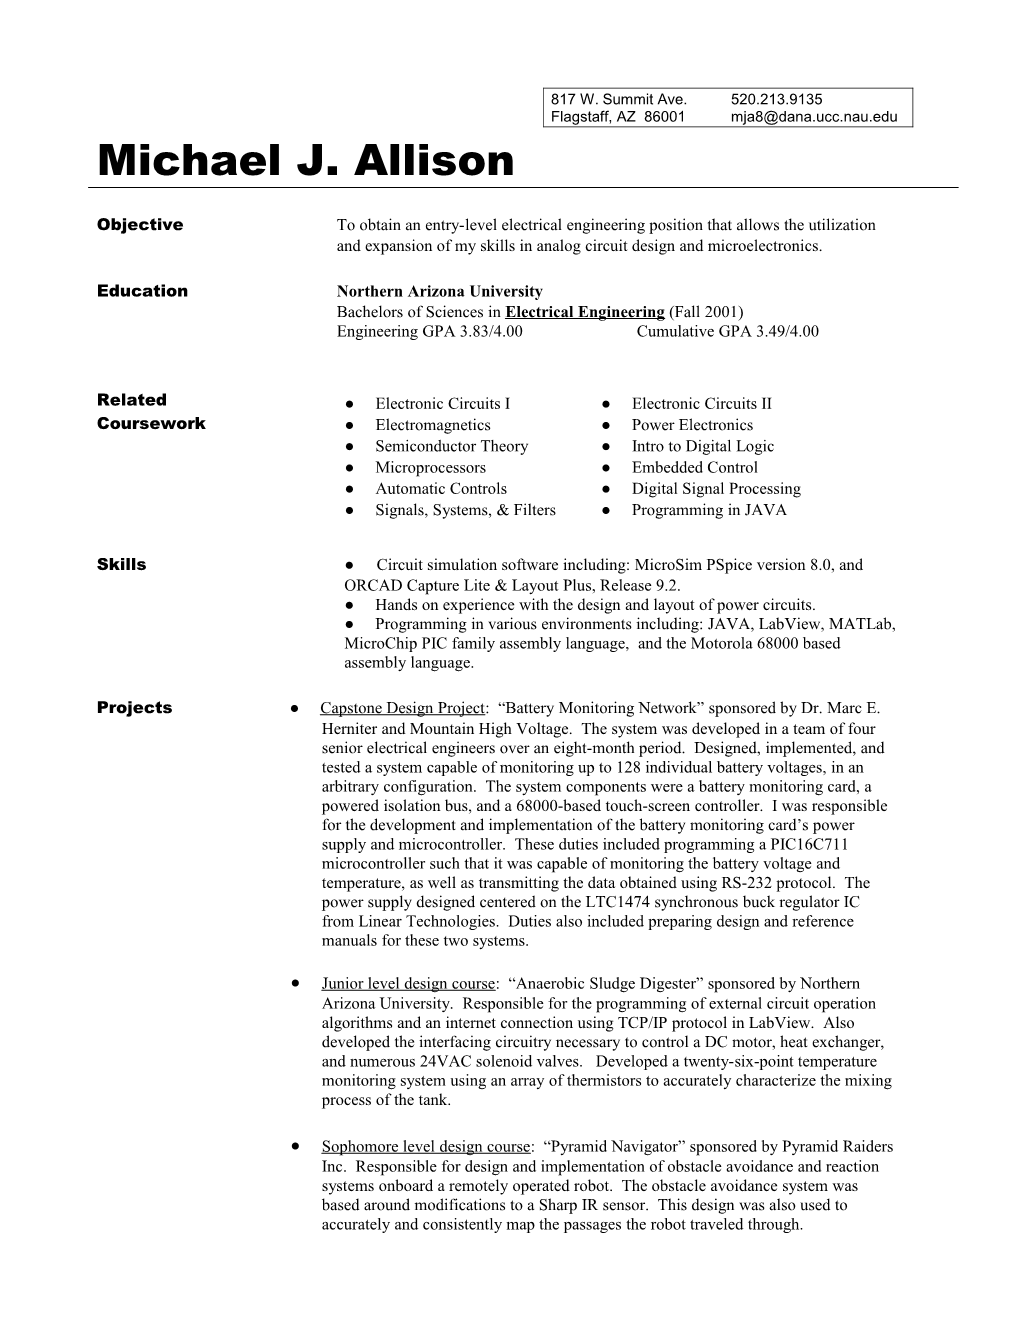 Michael J. Allison